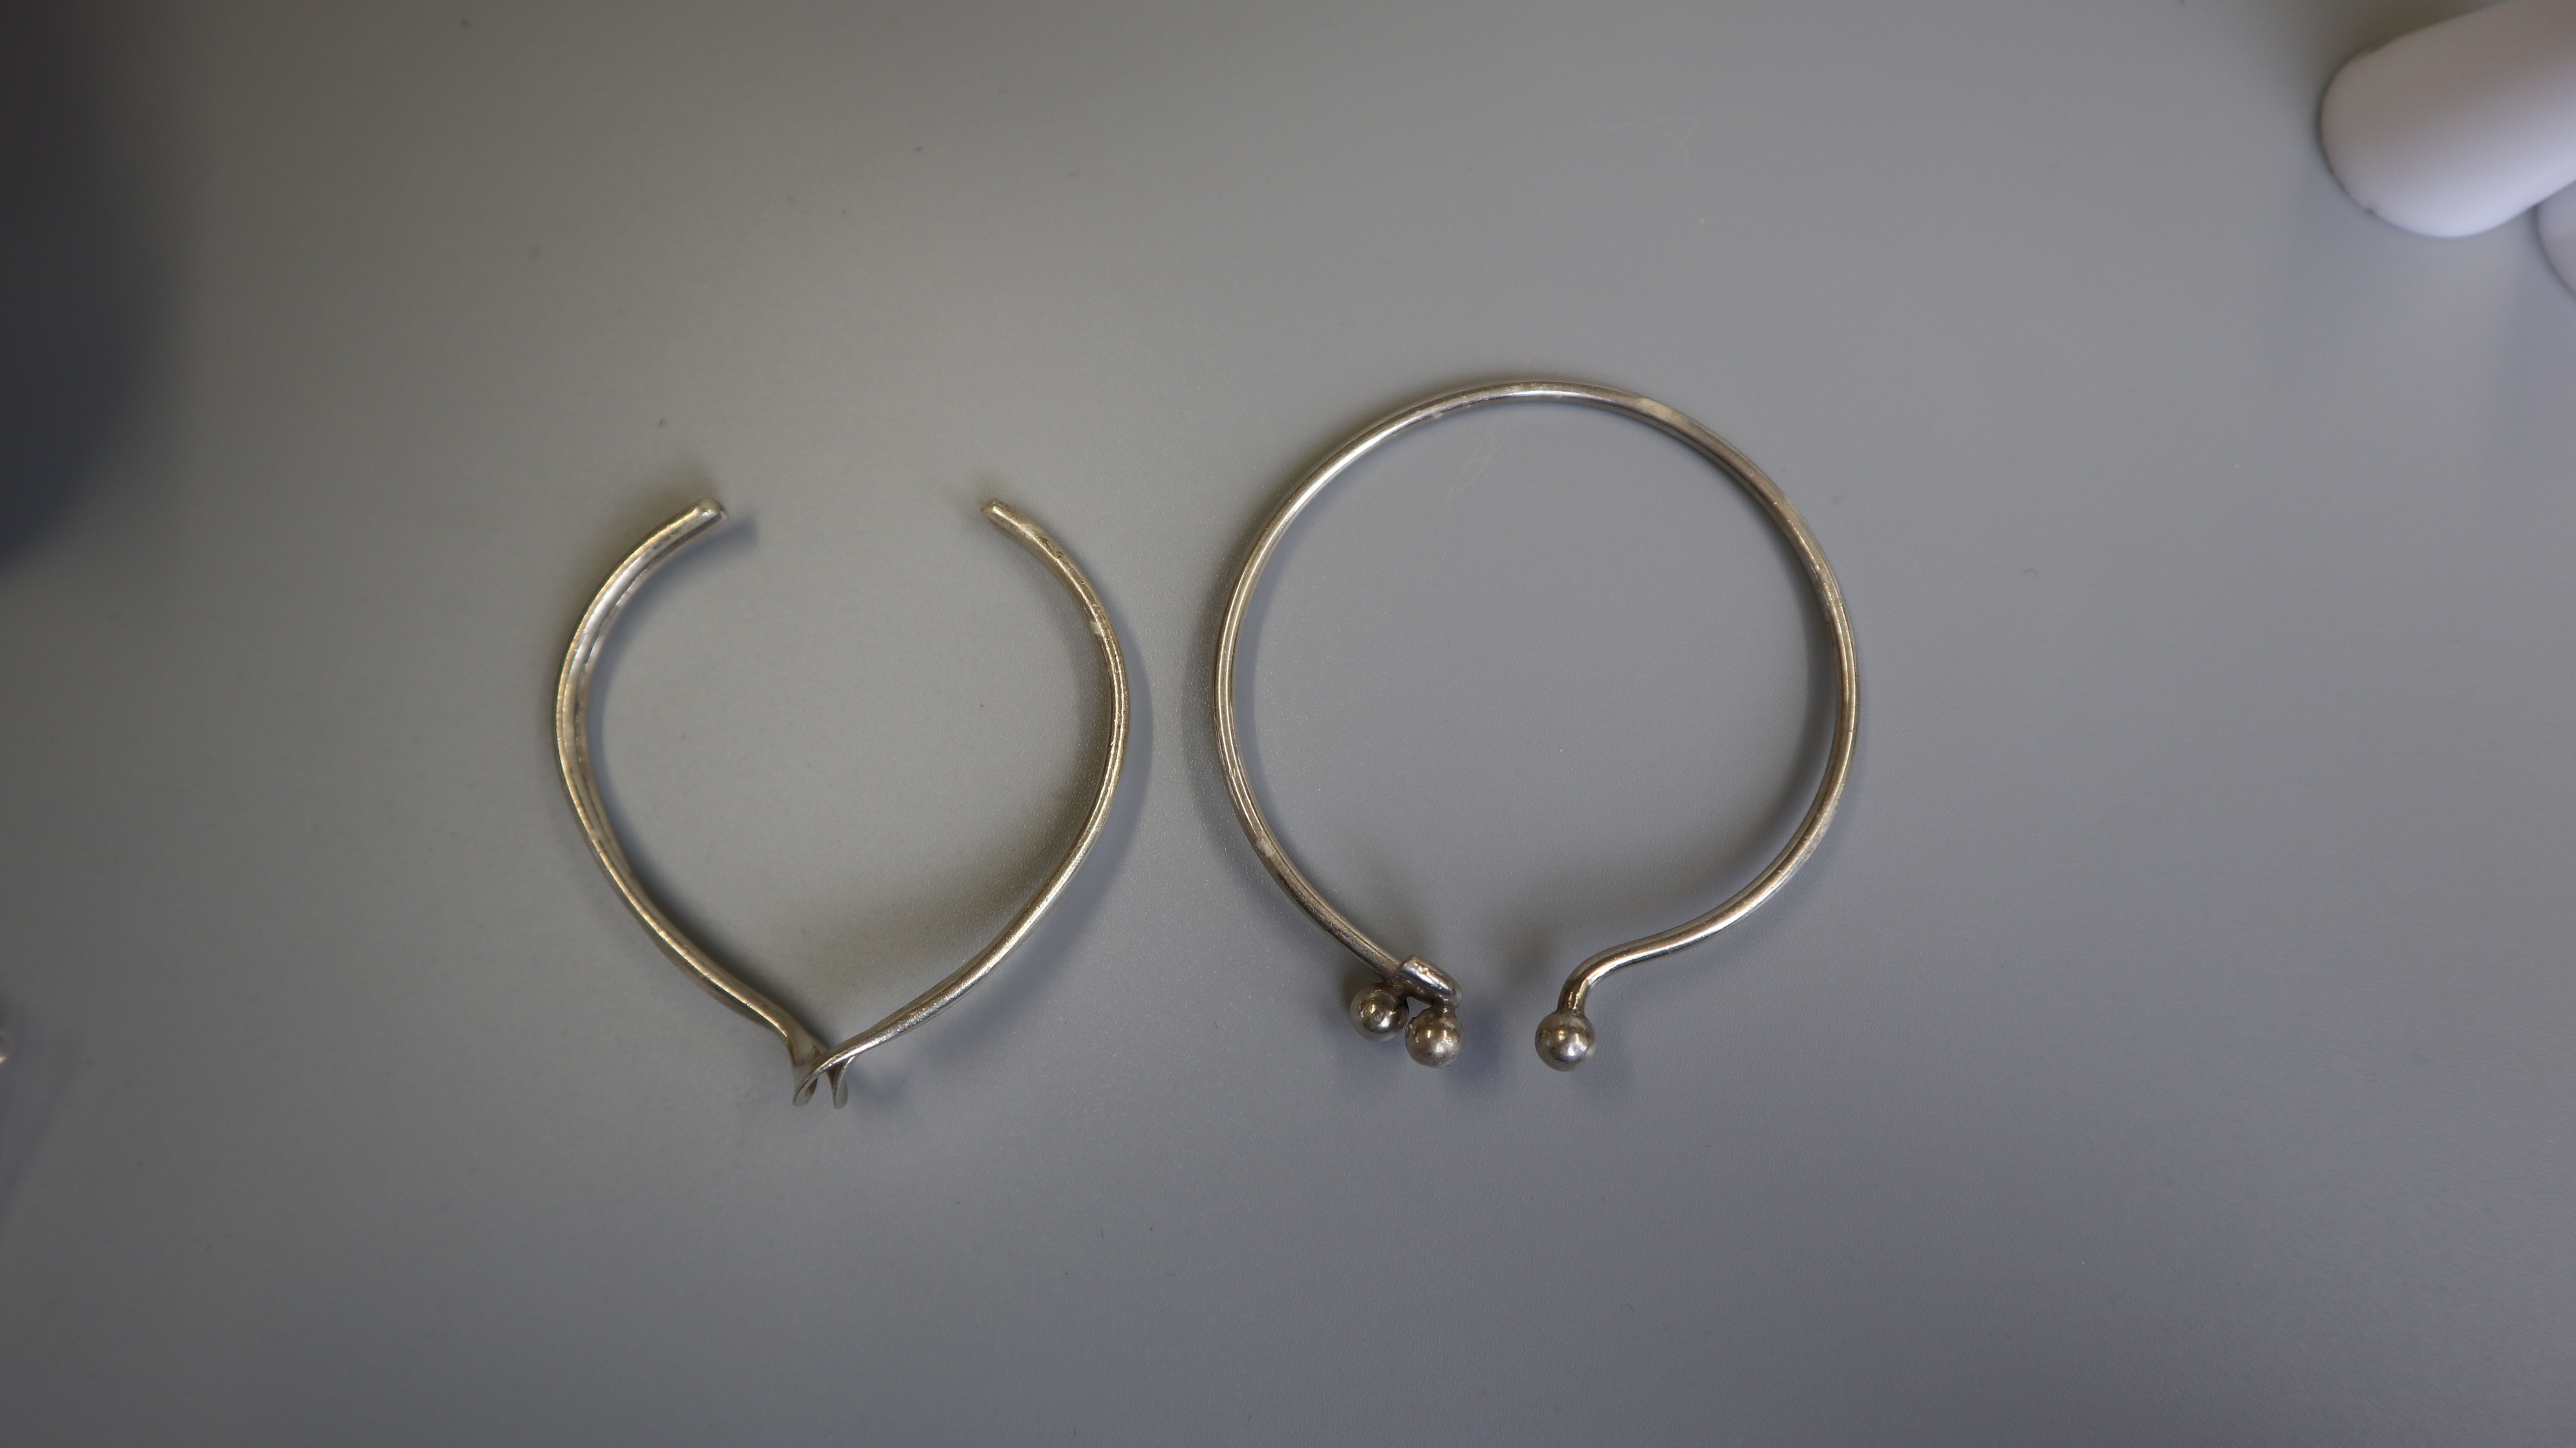 2 silver slave bangles - Image 2 of 2